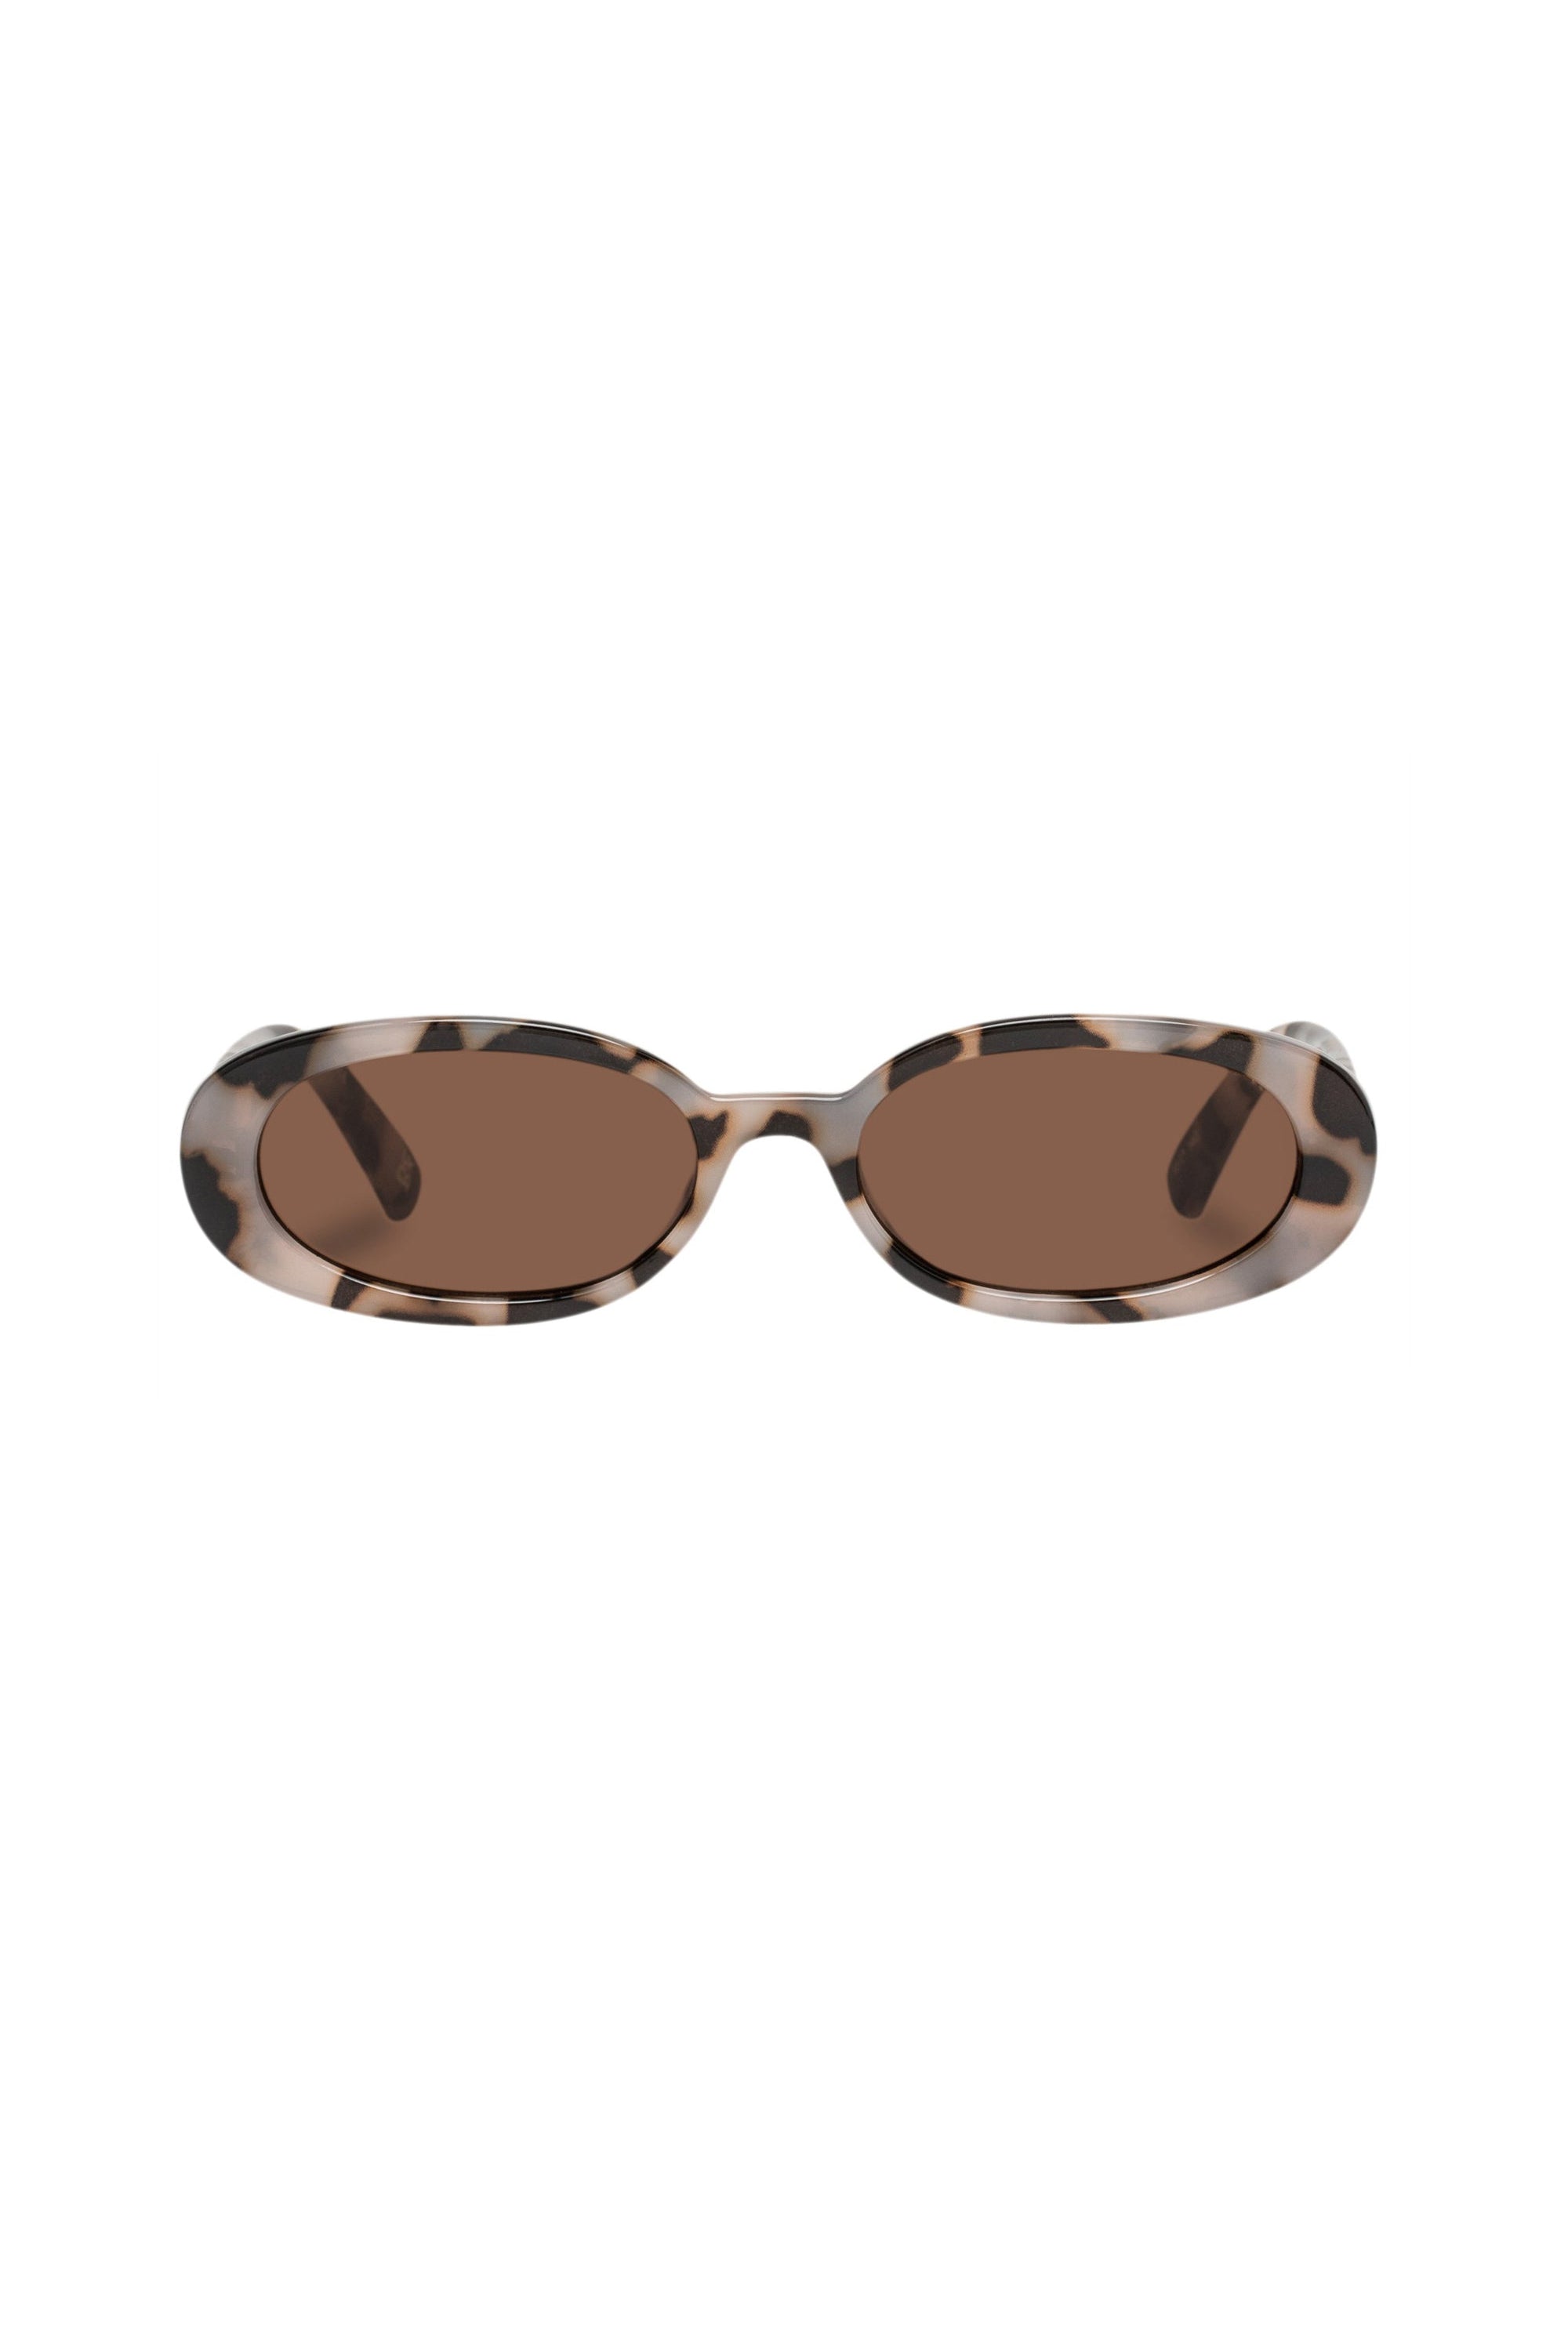 Le Specs Outta Love Sunglasses - Cookie Tort - RUM Amsterdam